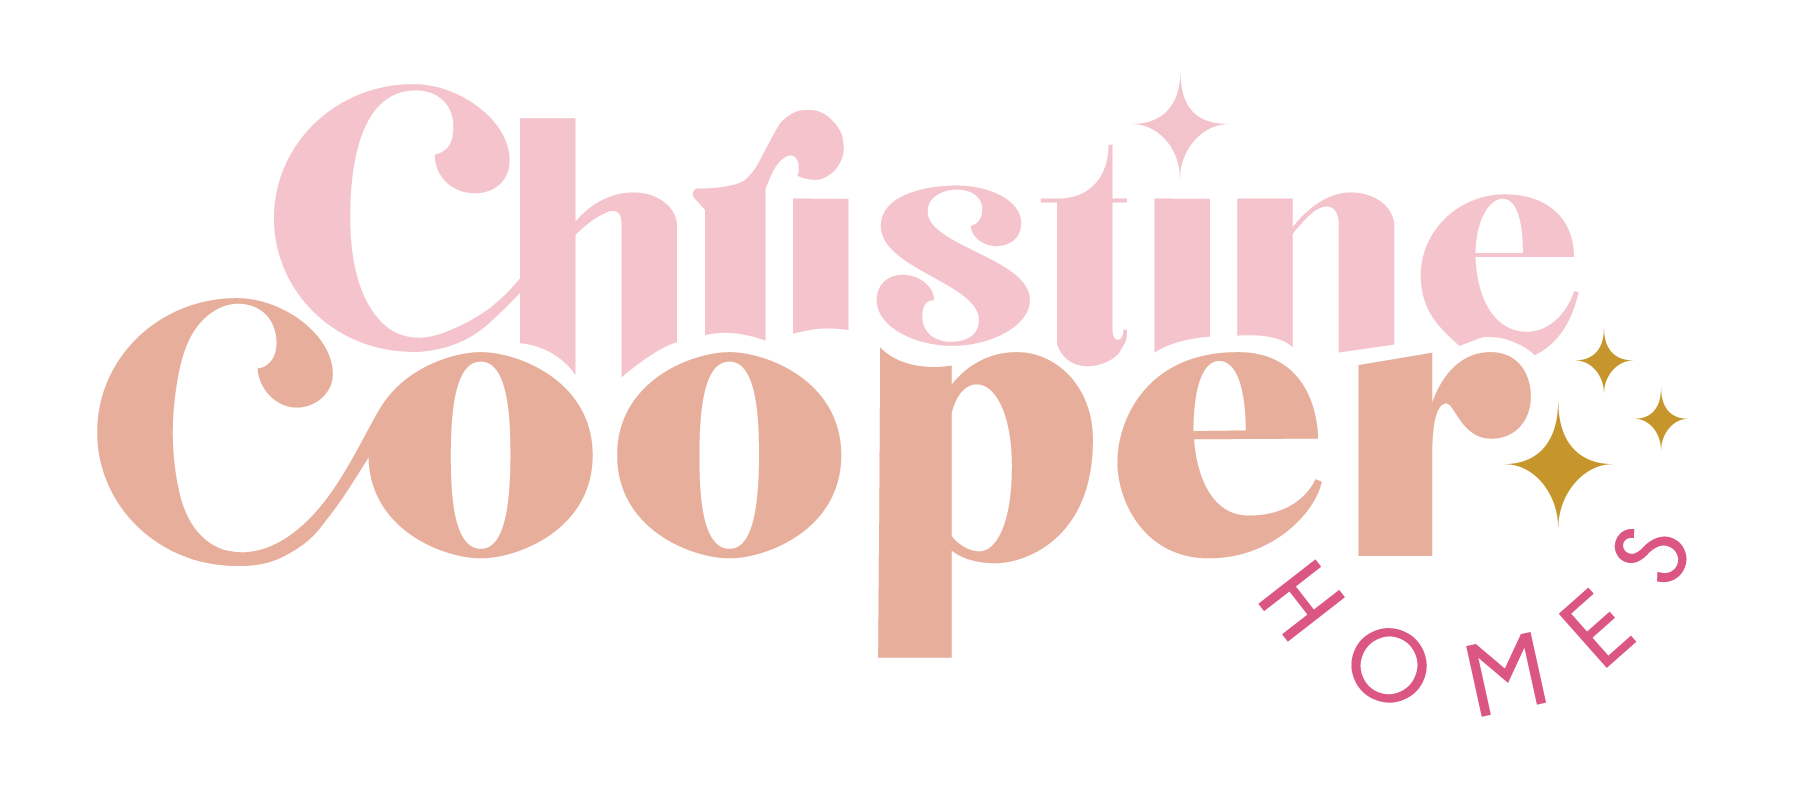 Christine Cooper